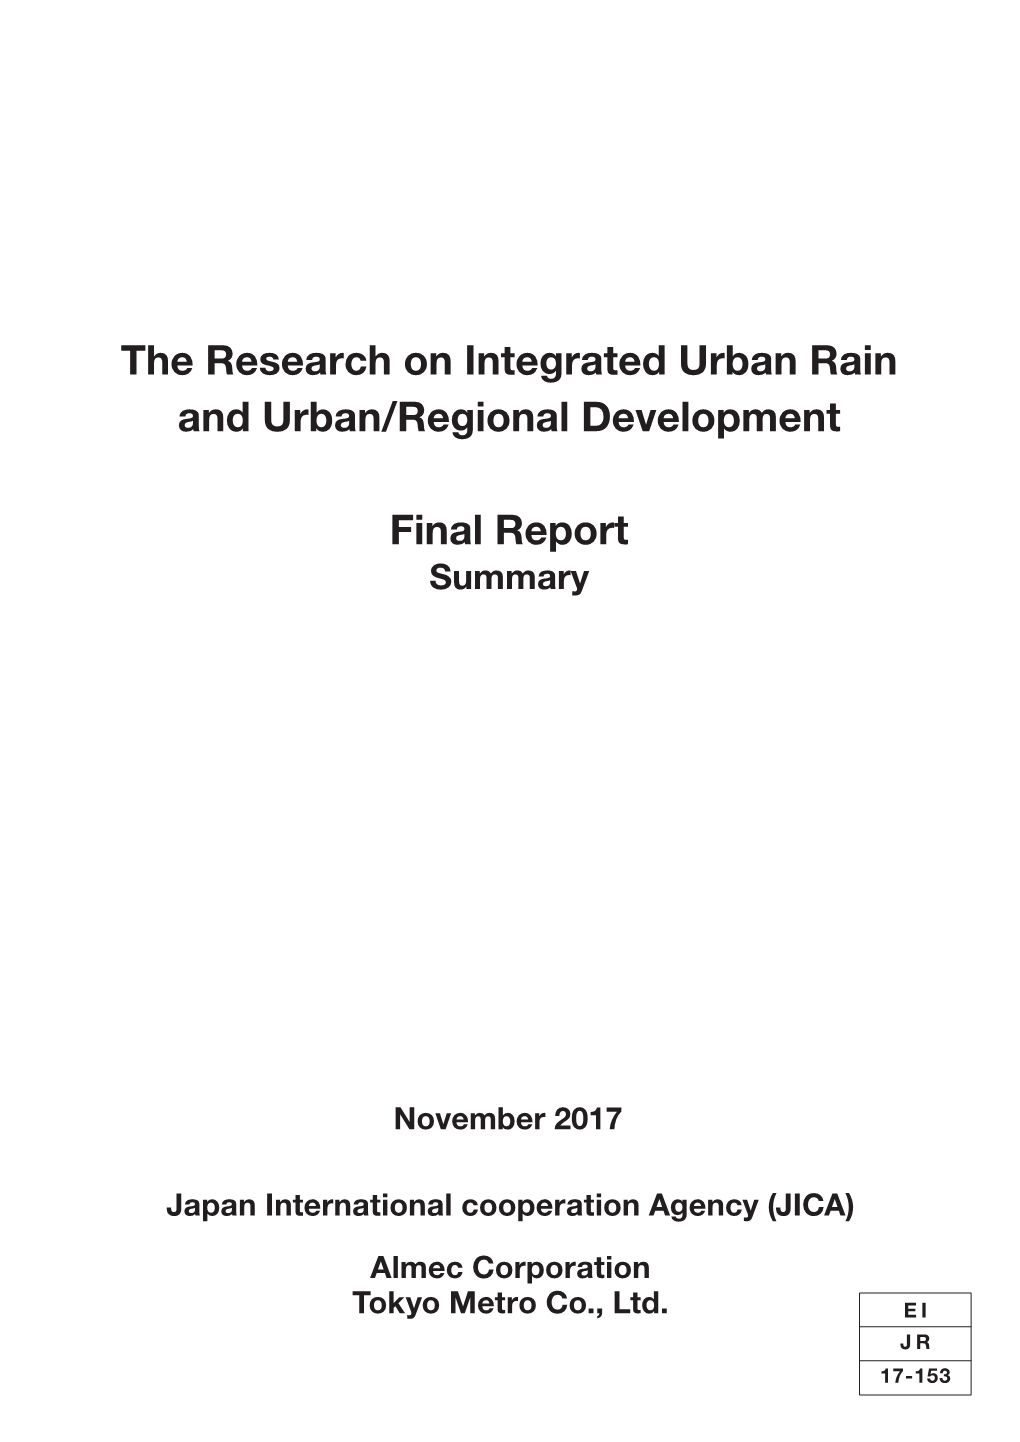 The Research on Integrated Urban Rain and Urban/Regional Development